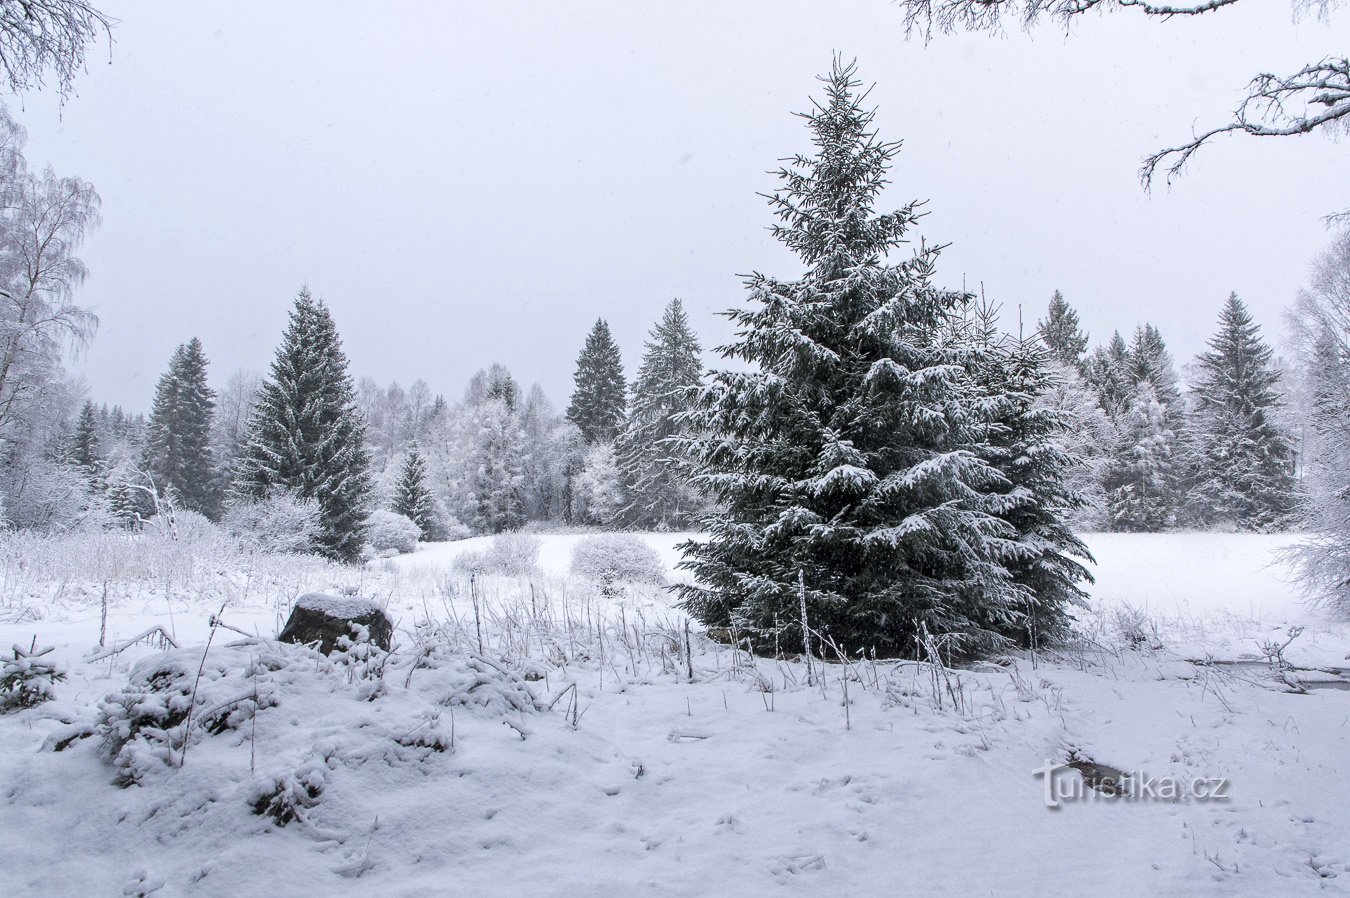 Winter week in Šumava – February 2020 pt. 2